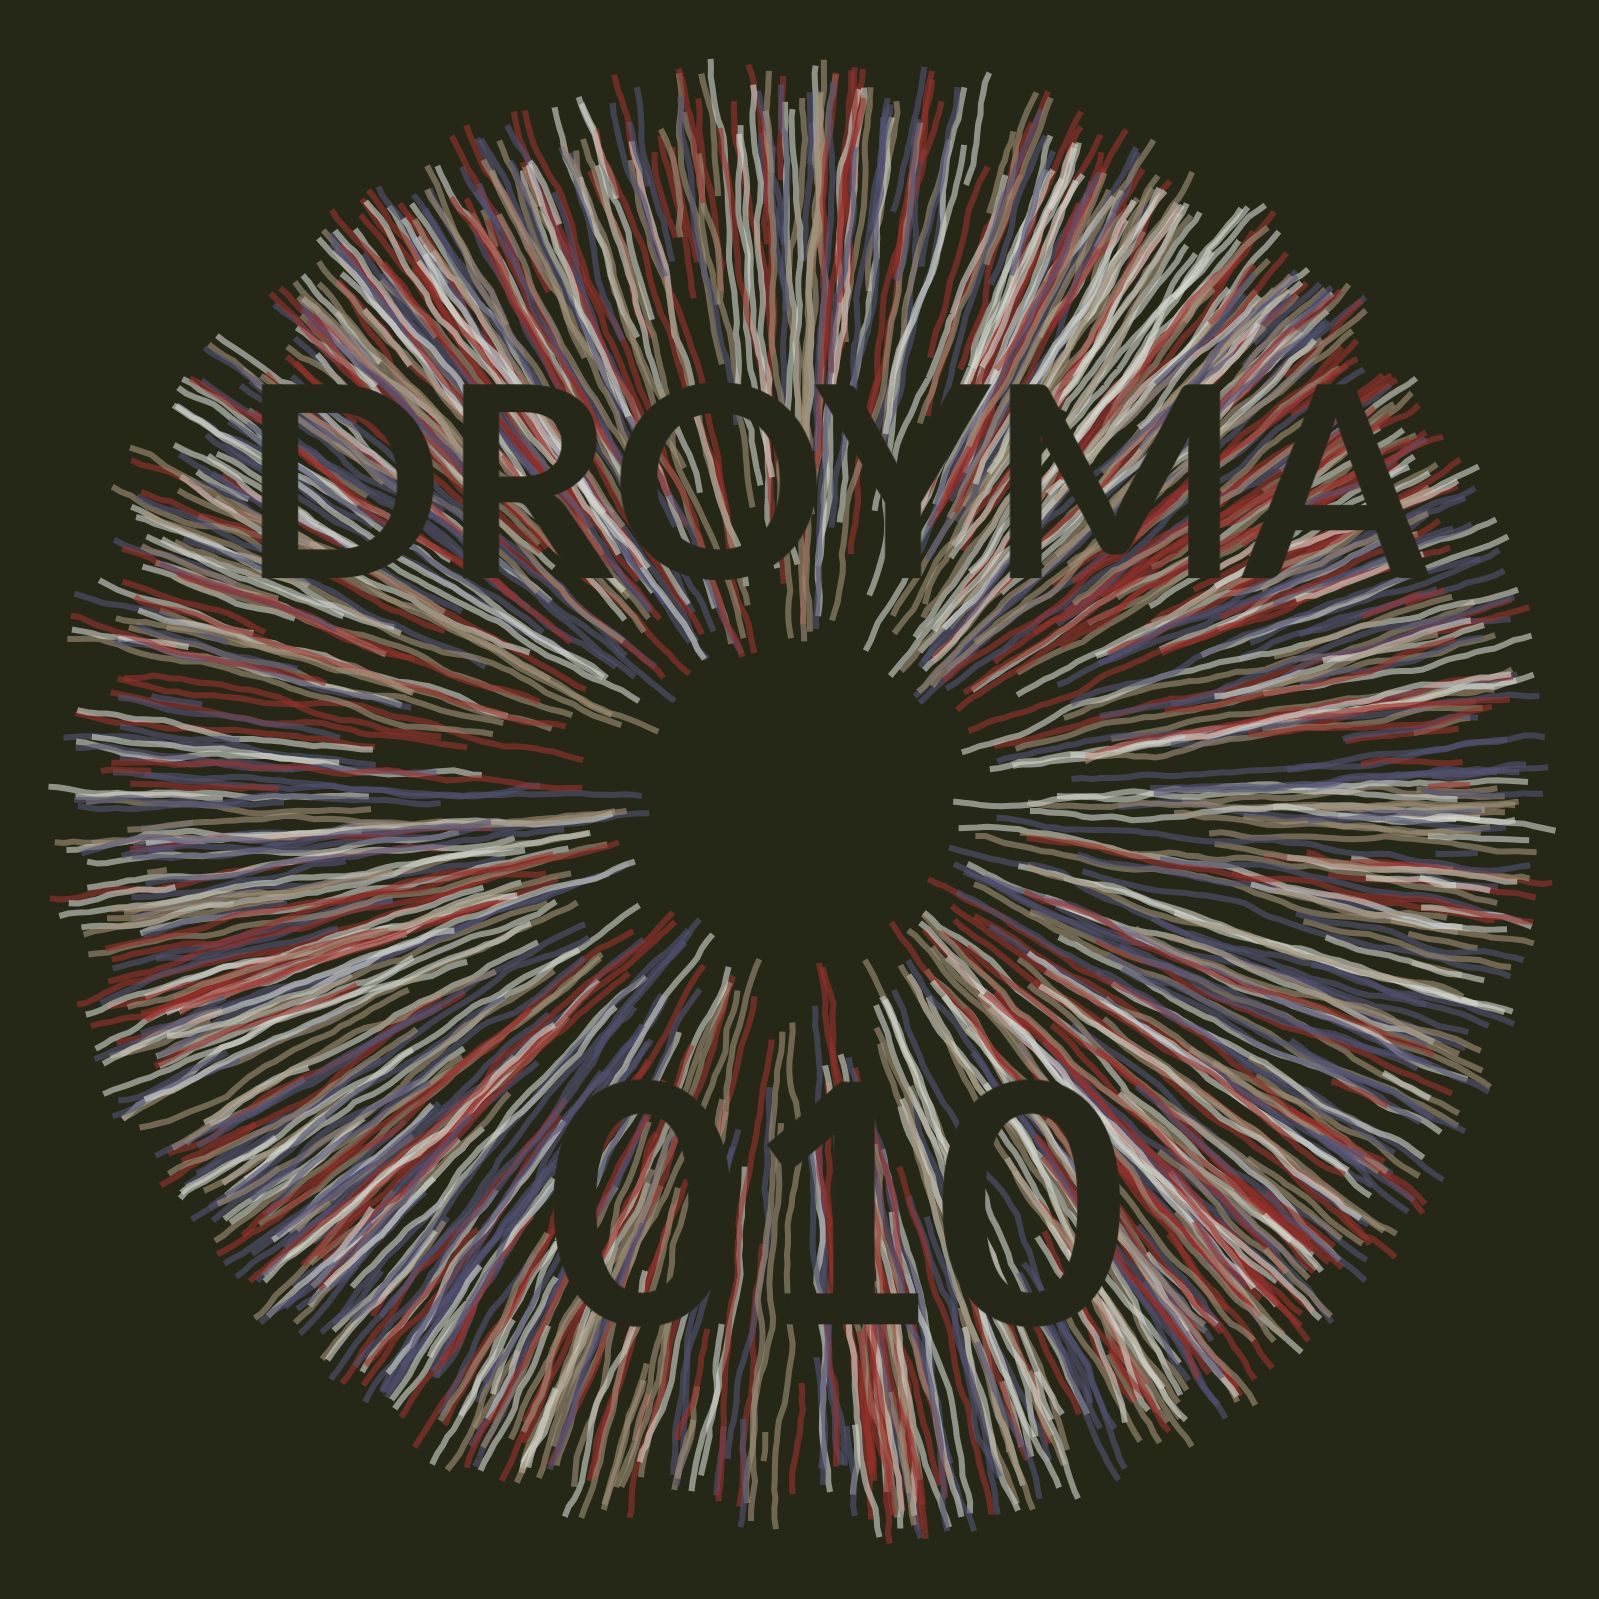 Muat turun Droyma Mix 010 - April 2019